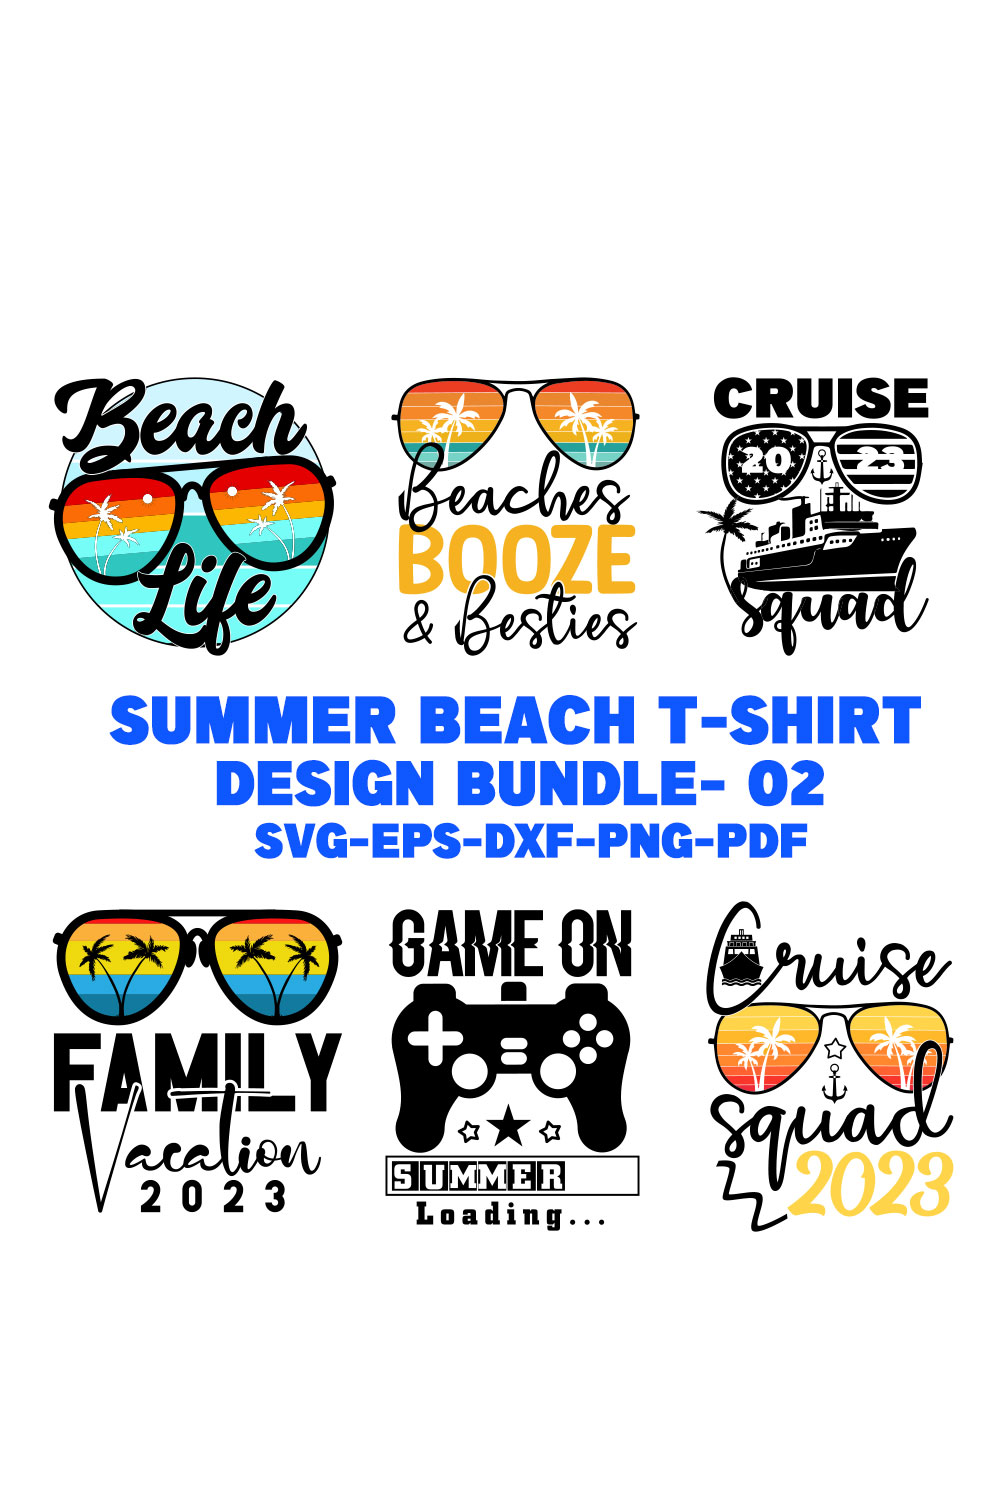 Summer Vacation T-shirt Design Bundle- 02 pinterest preview image.